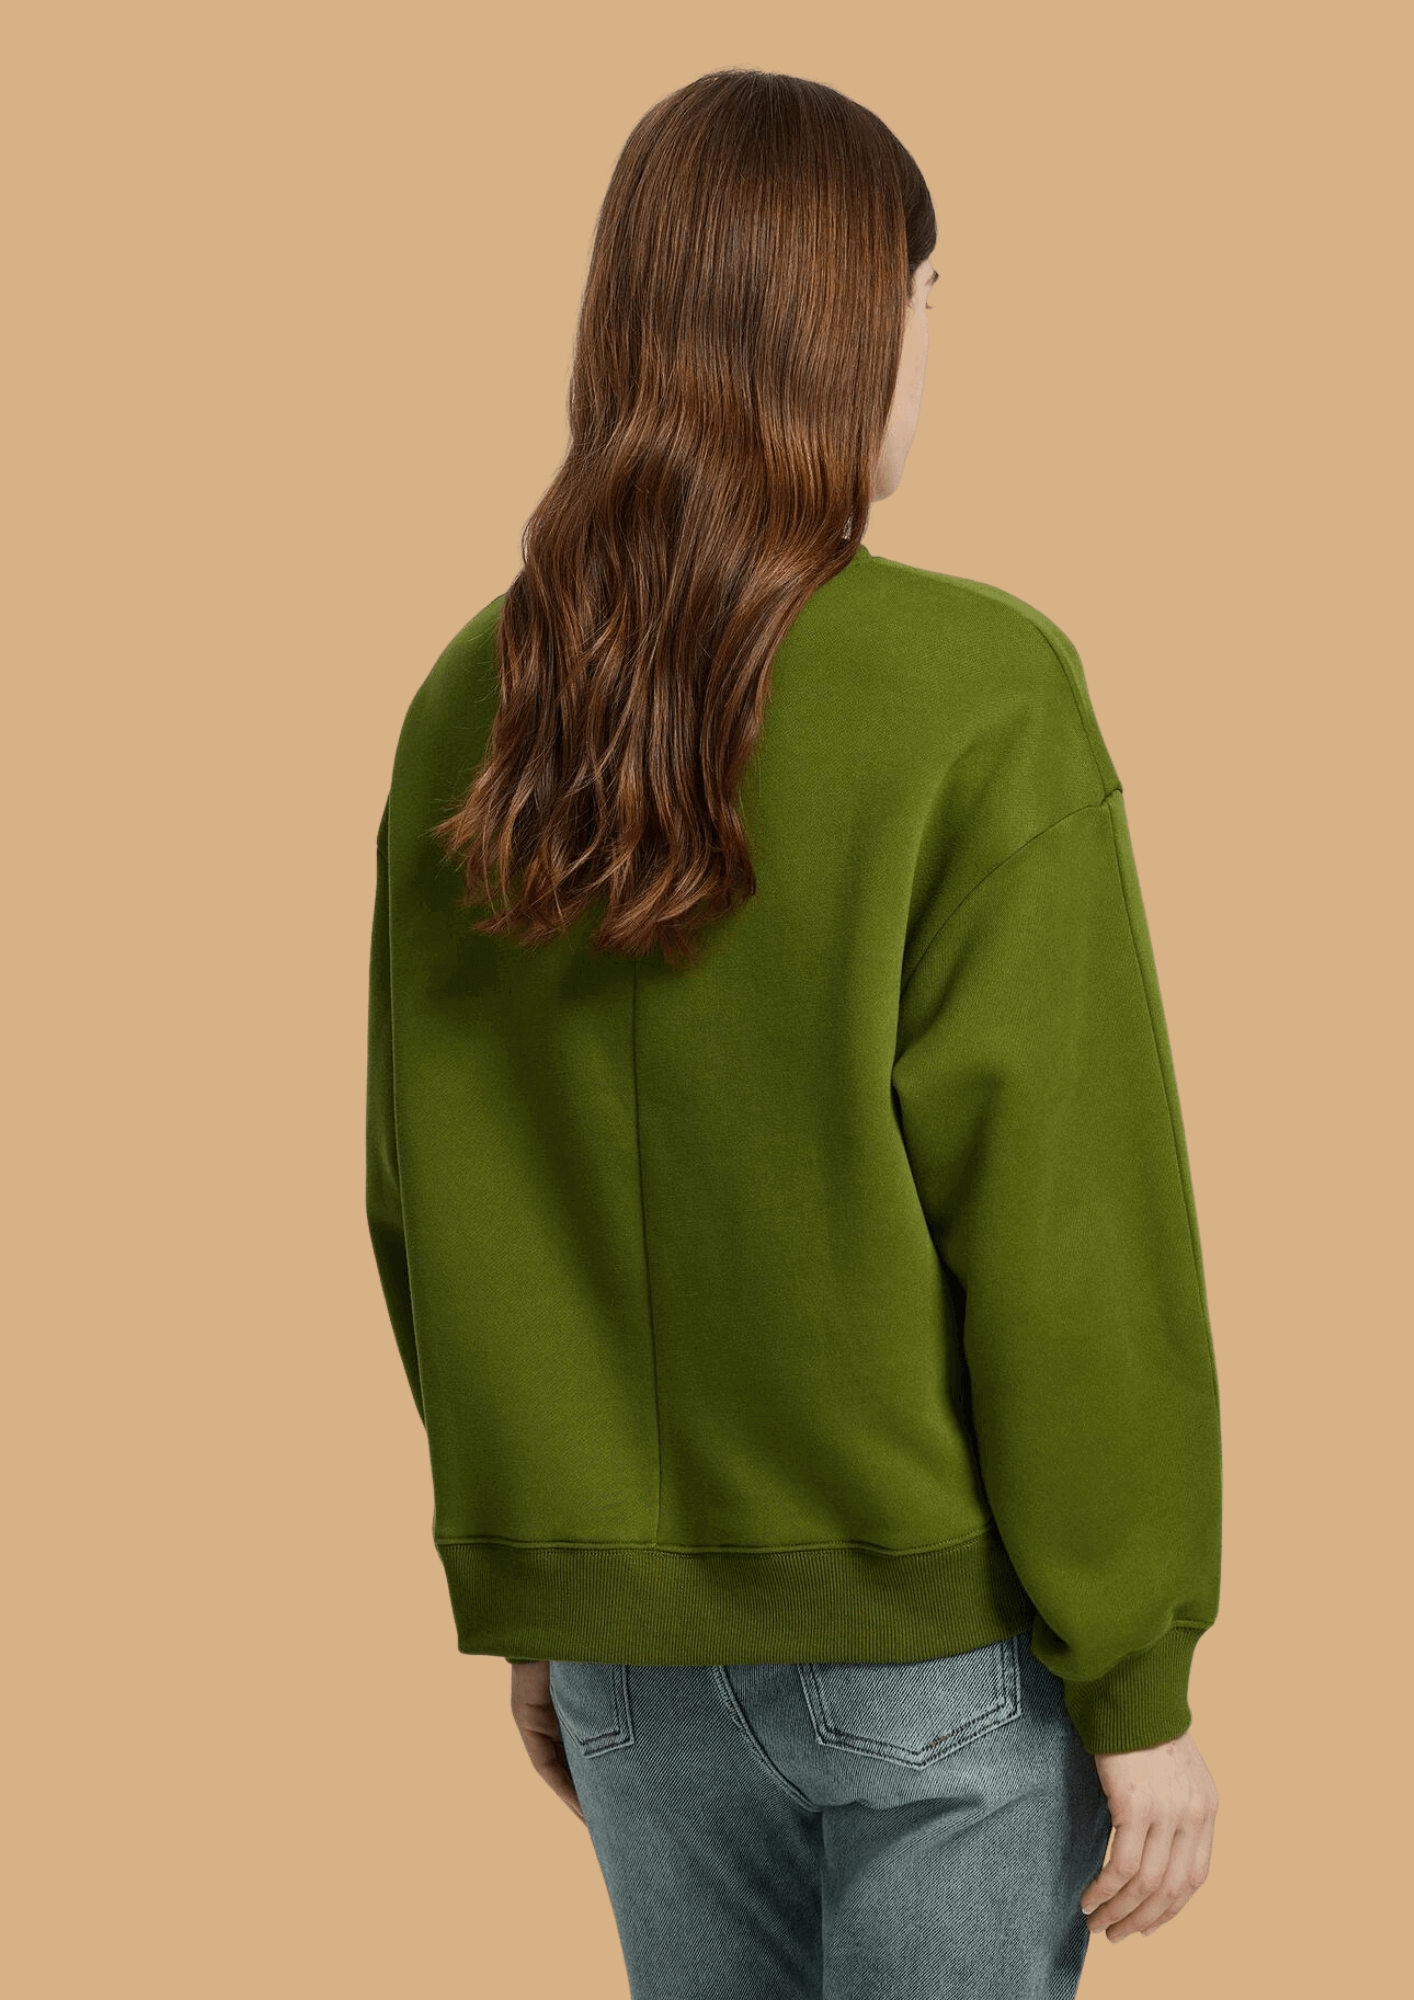 I see you printed olive green color sweatshirt 